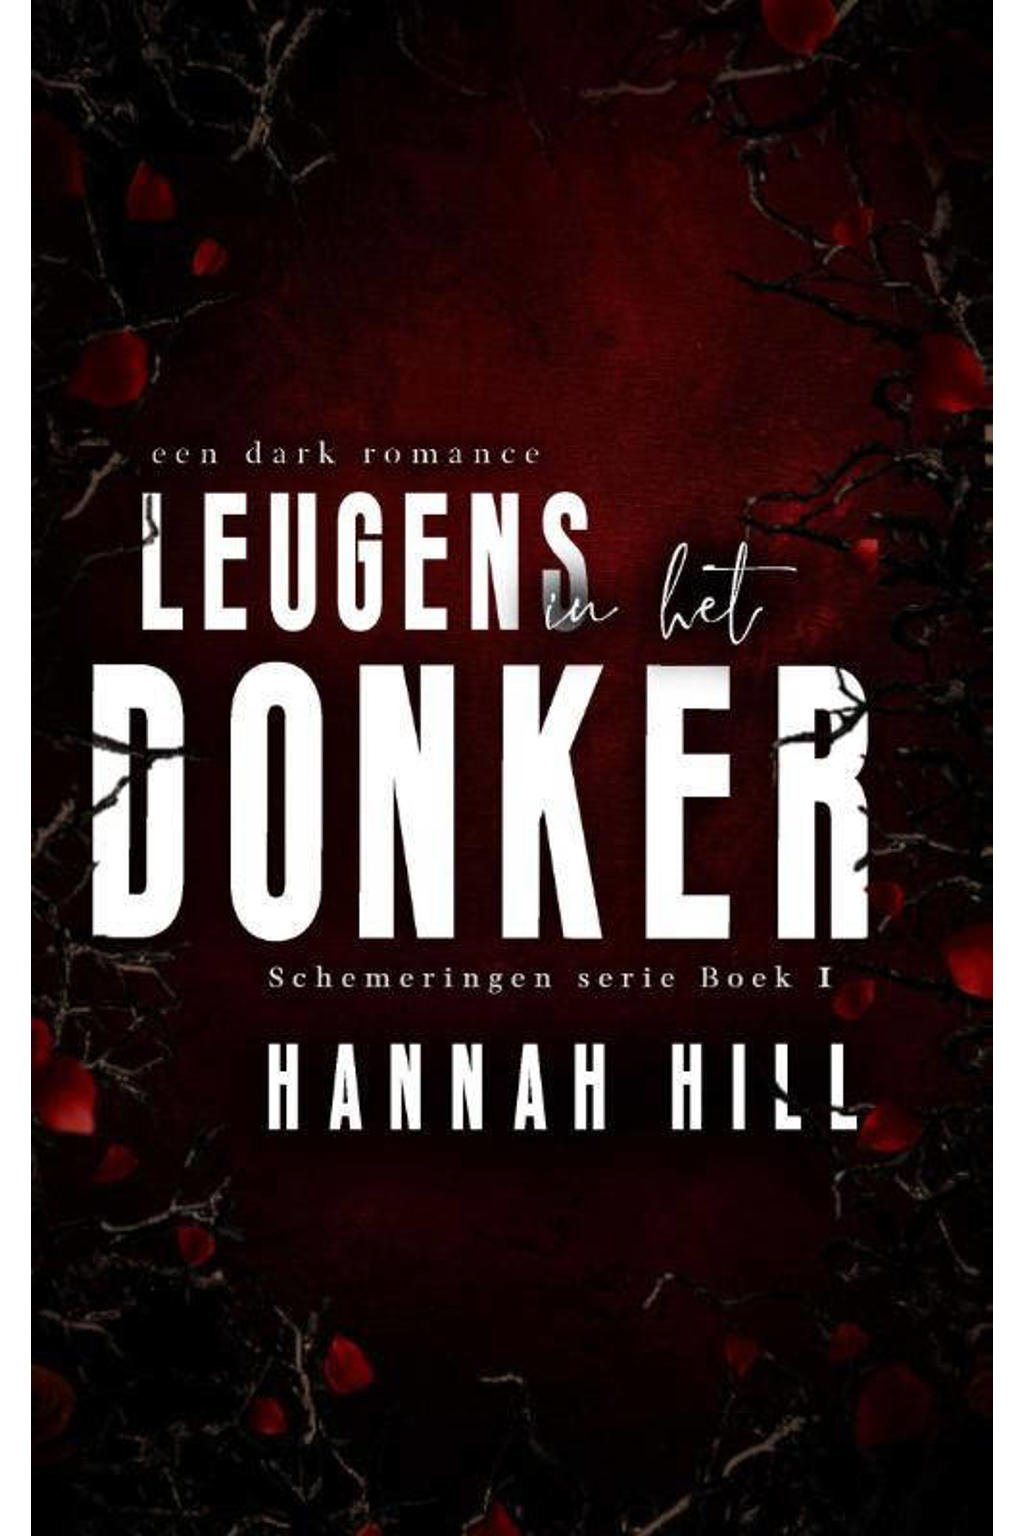 Schemeringen: Leugens in het donker - Hannah Hill